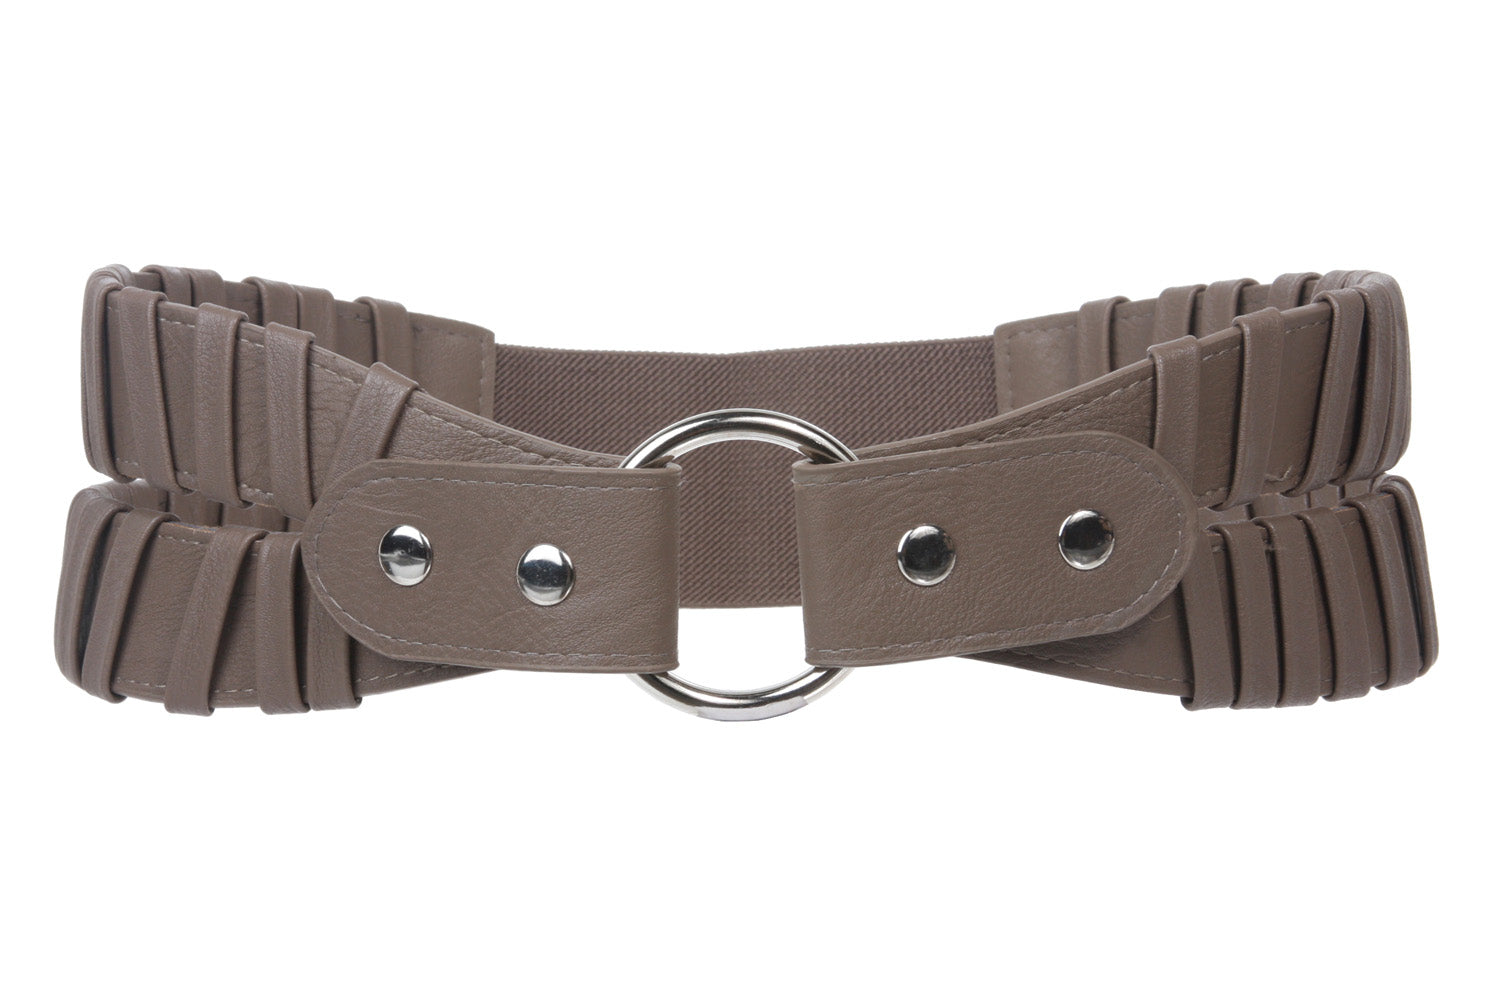 3 1/2" Wide High Waist Fashion Ring Fold Stretch Belt Size: One